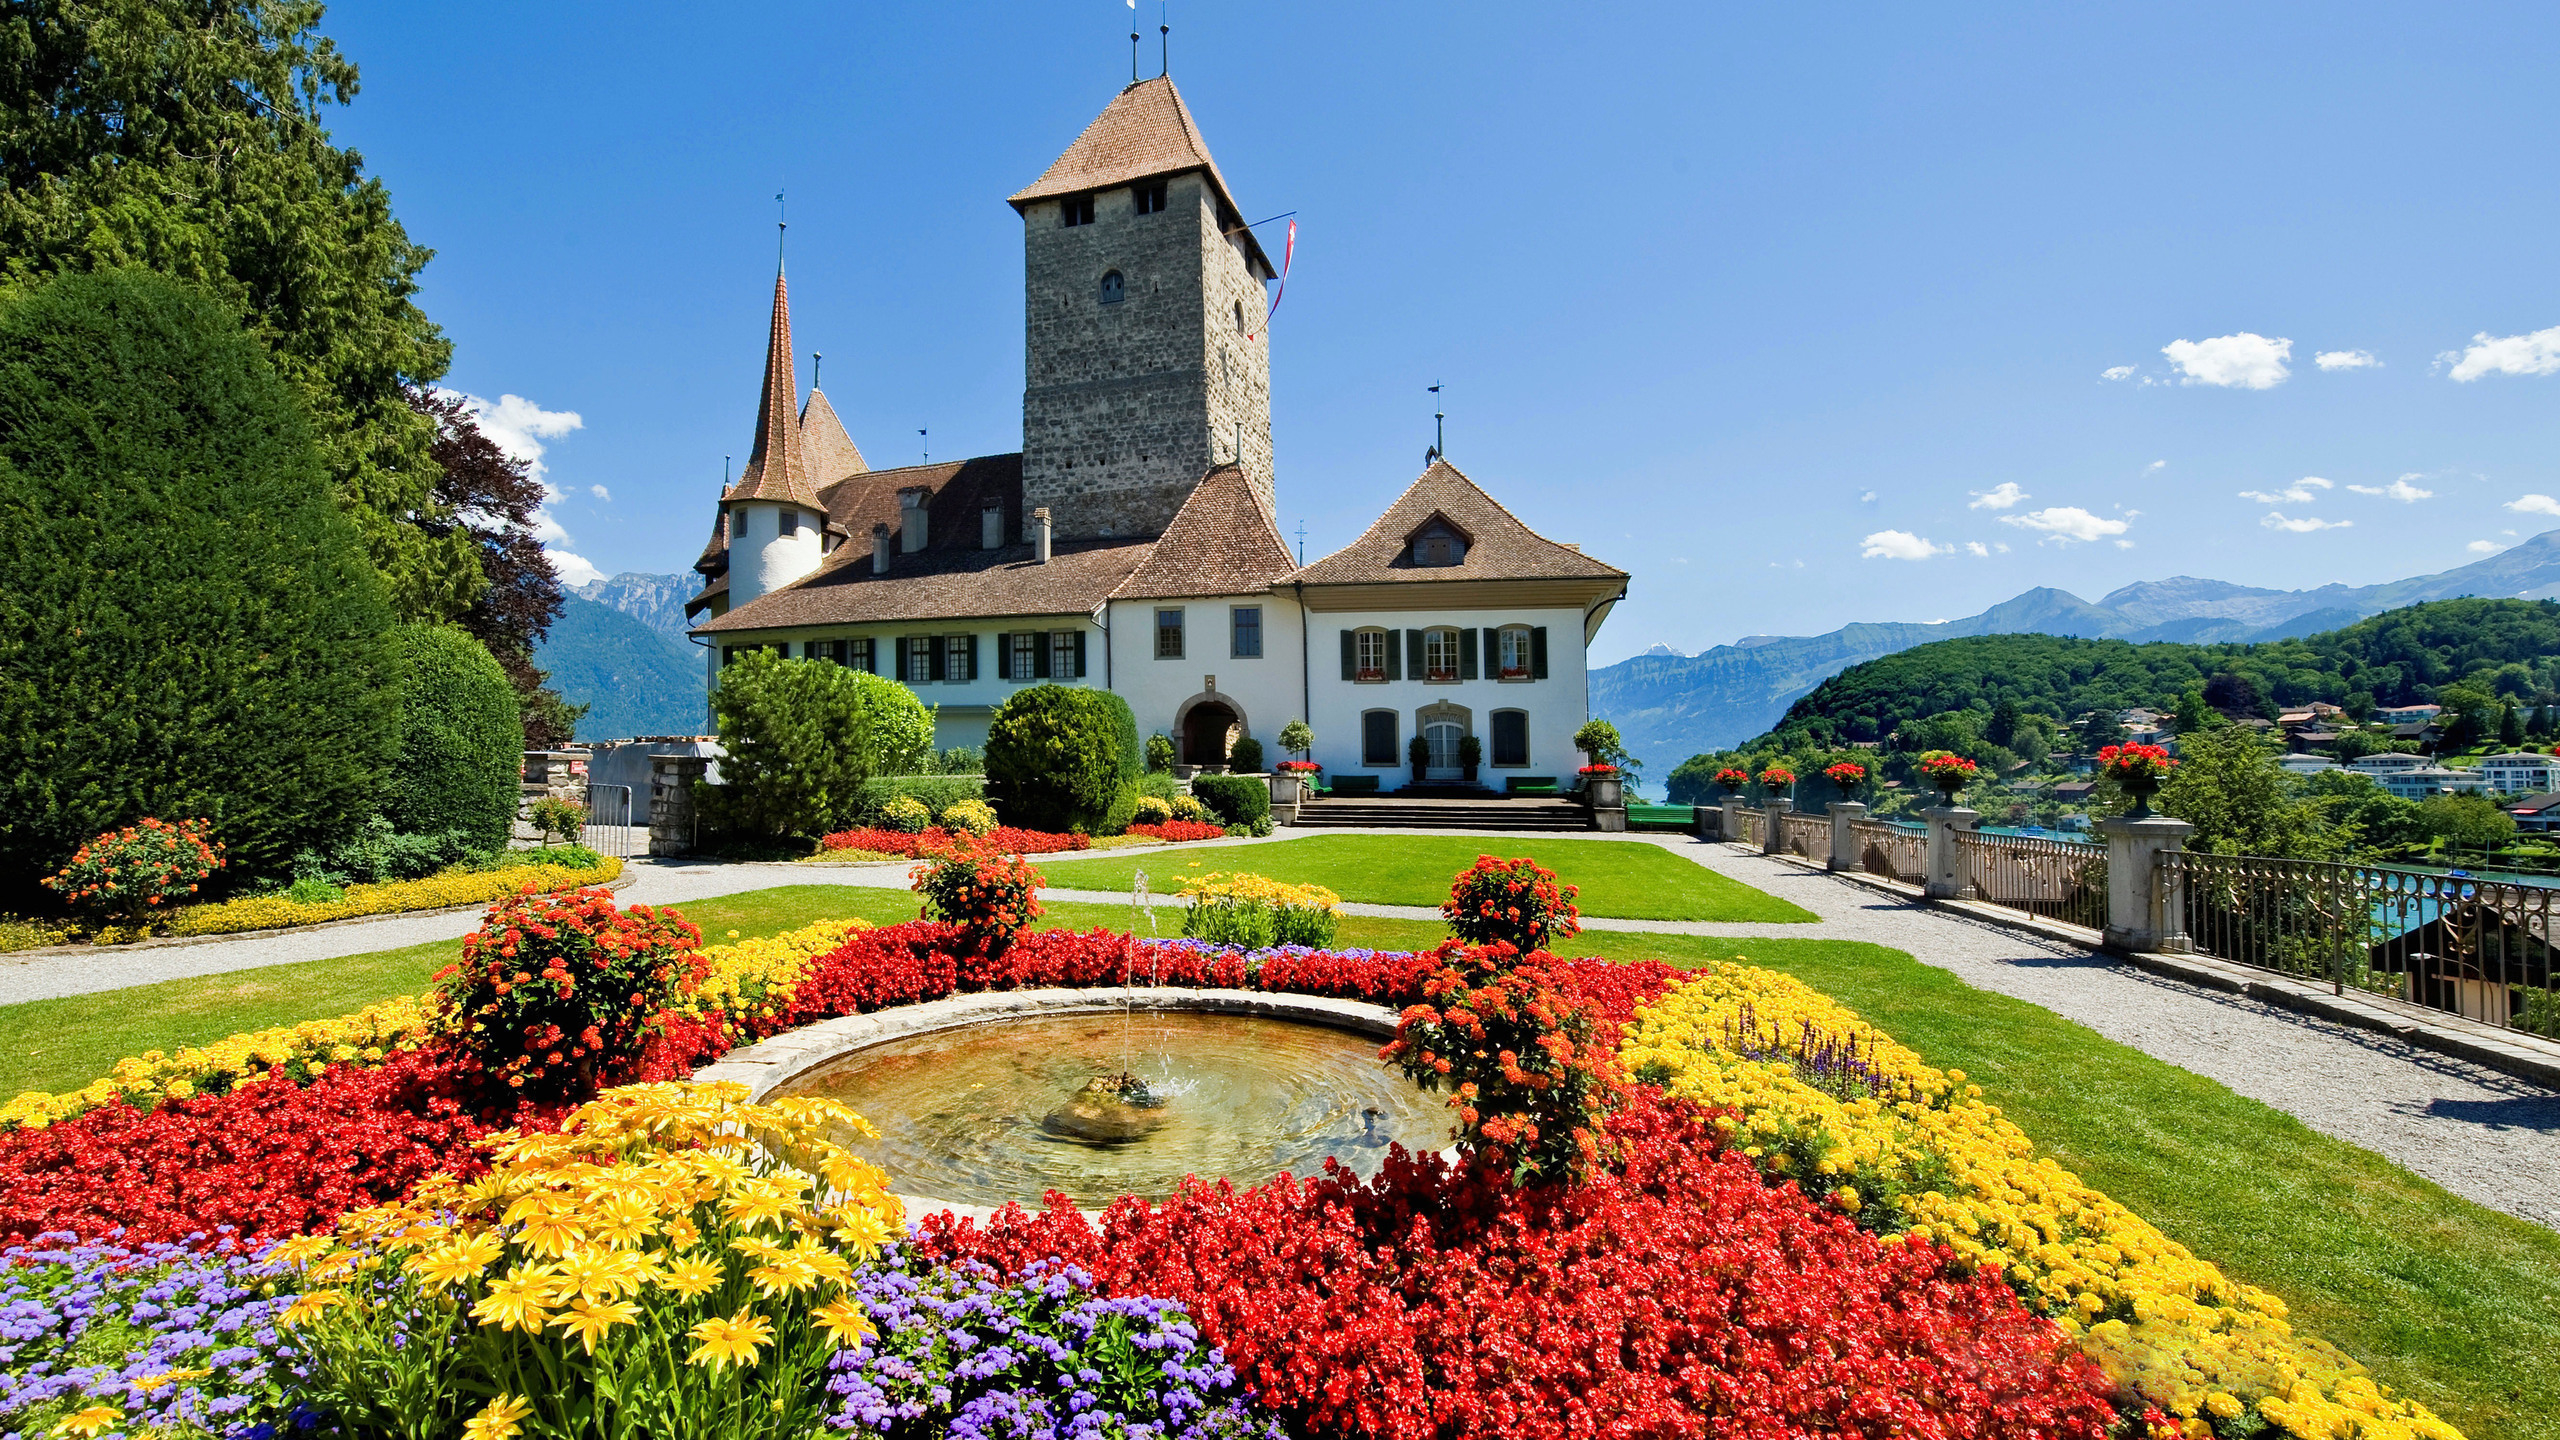 switzerland, man made, castle, building, flower, fountain, garden, castles Image for desktop